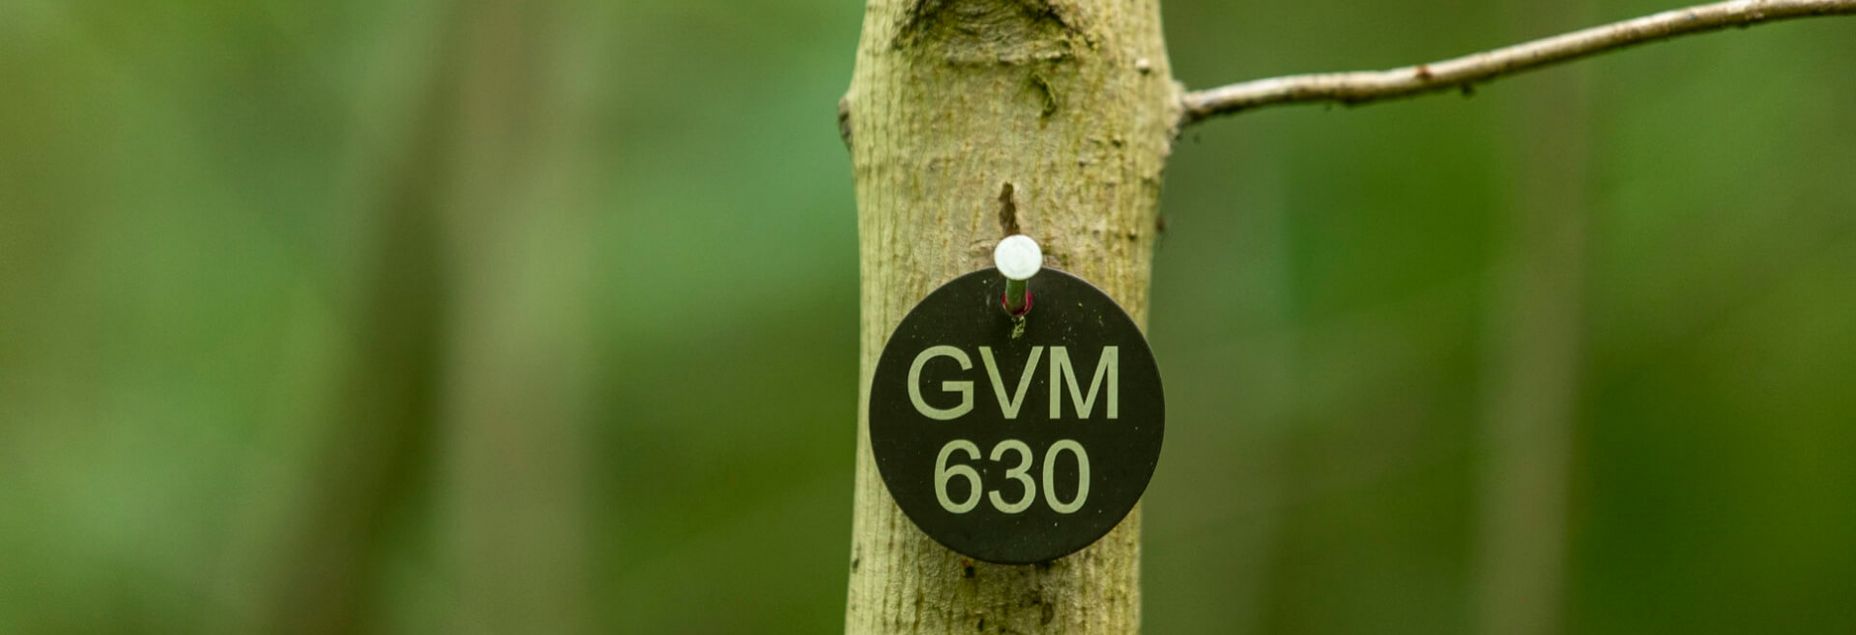 Baum GVM 630 - Plakette